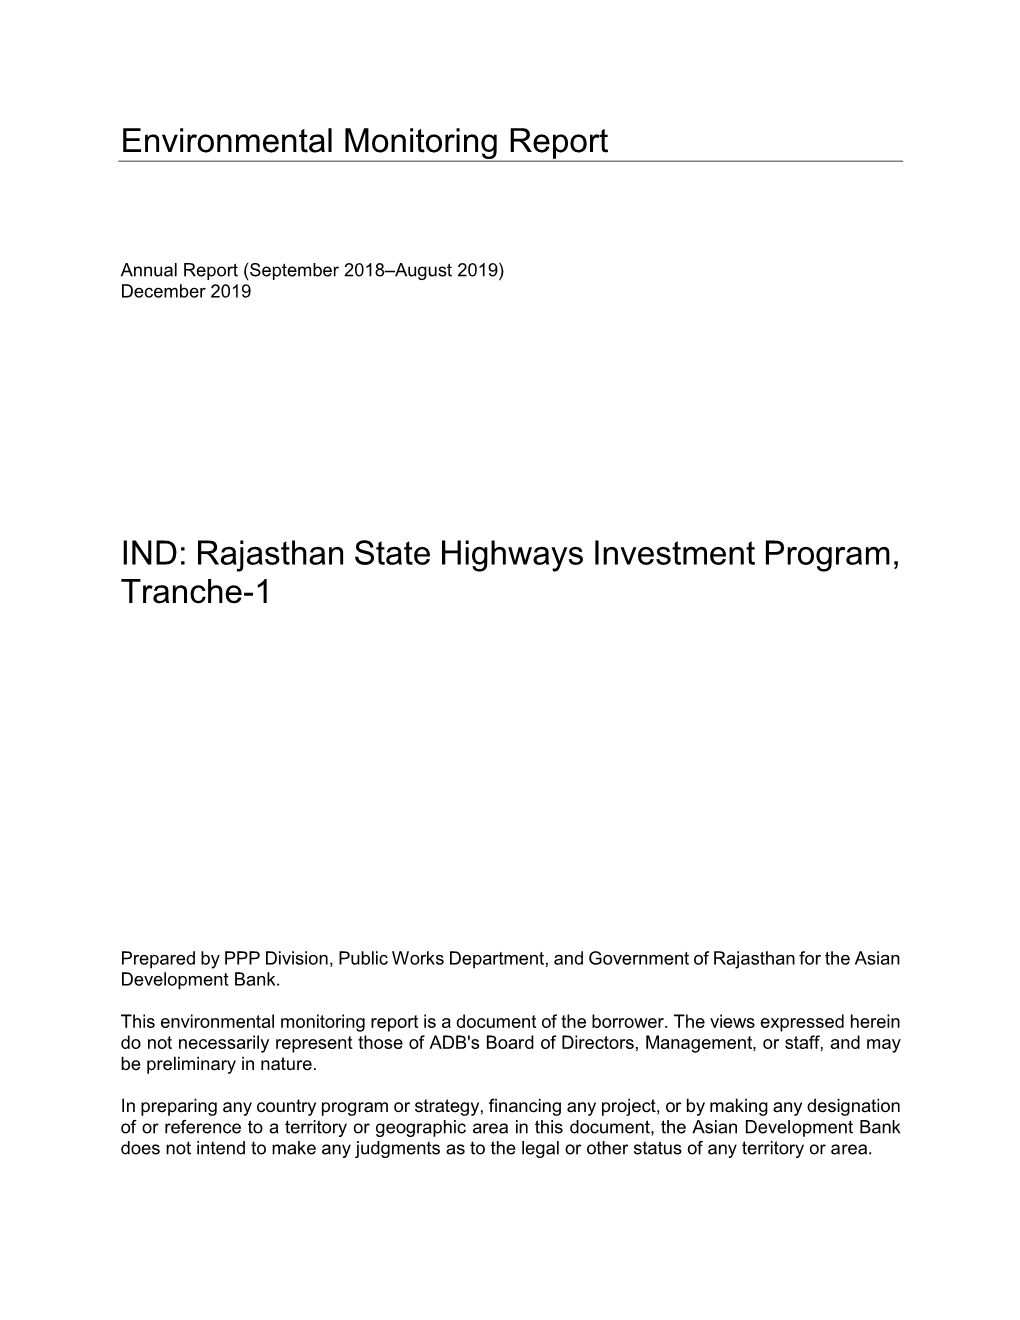 Rajasthan State Highway Investment Program